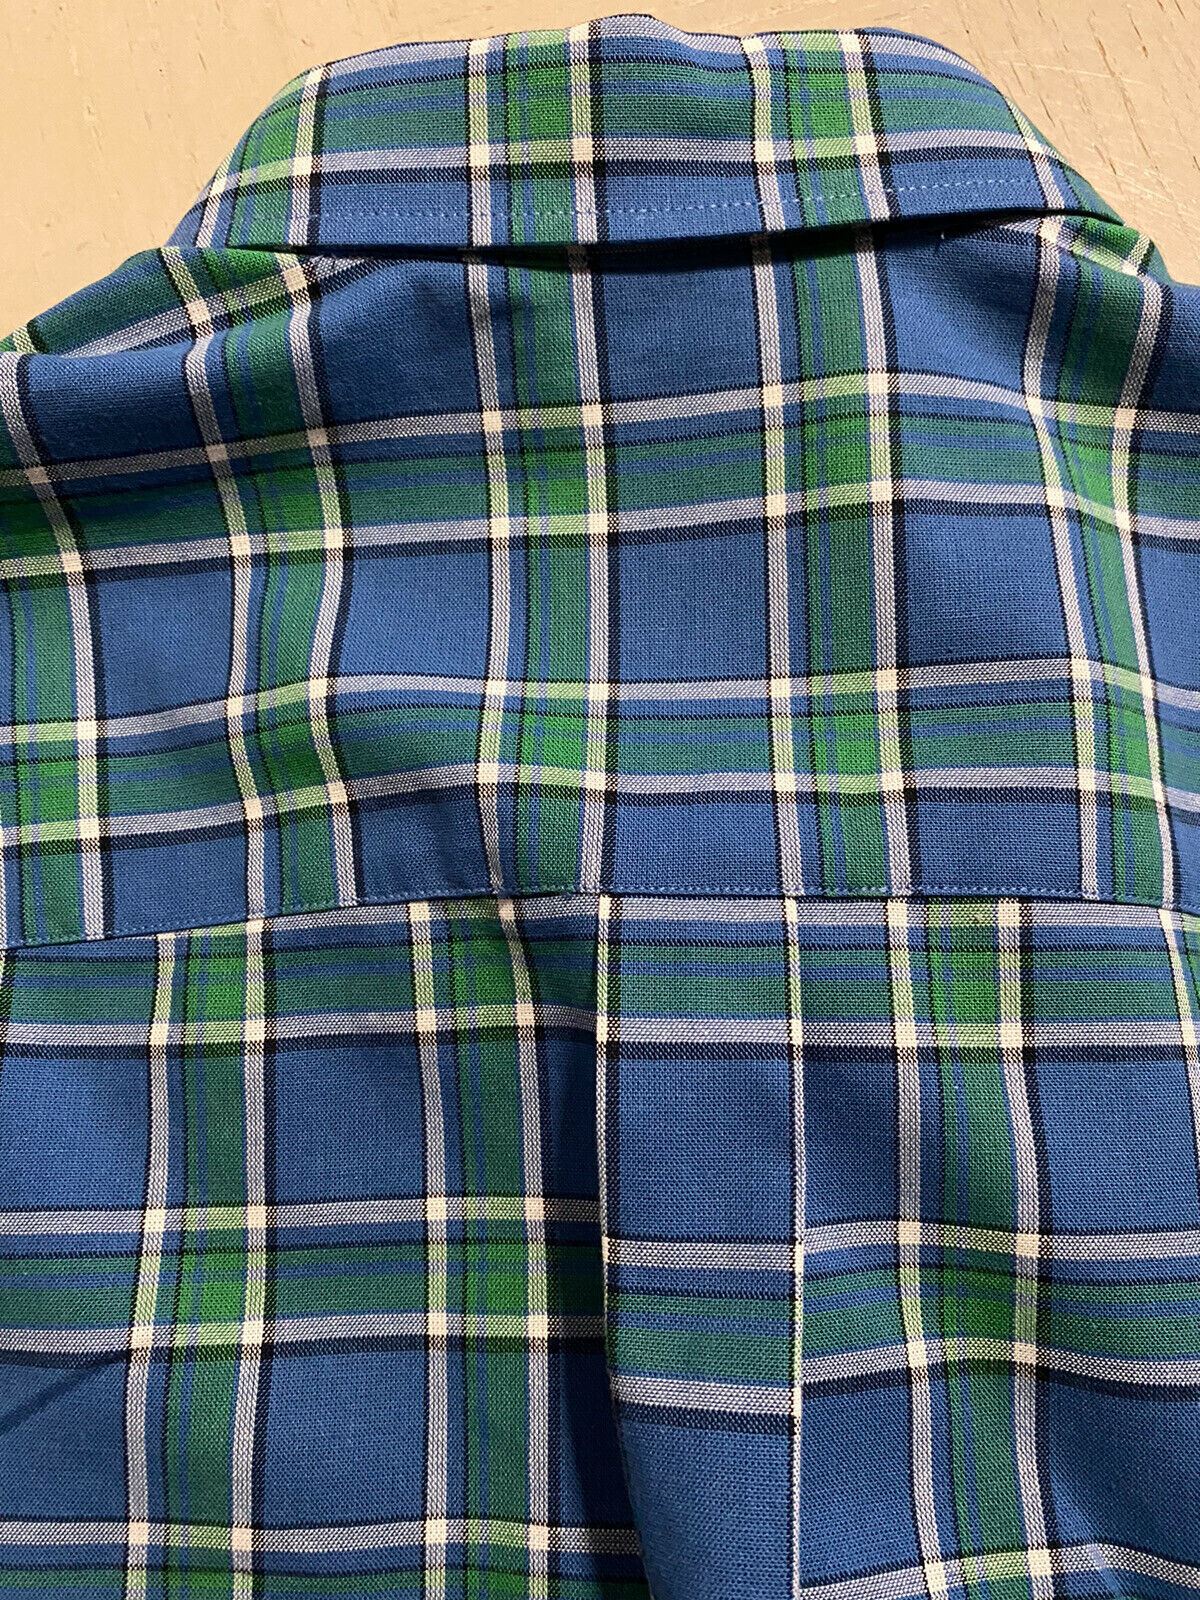 New $750 Gucci Men’s Short Sleeve Dress Shirt Blue Size XL  Italy